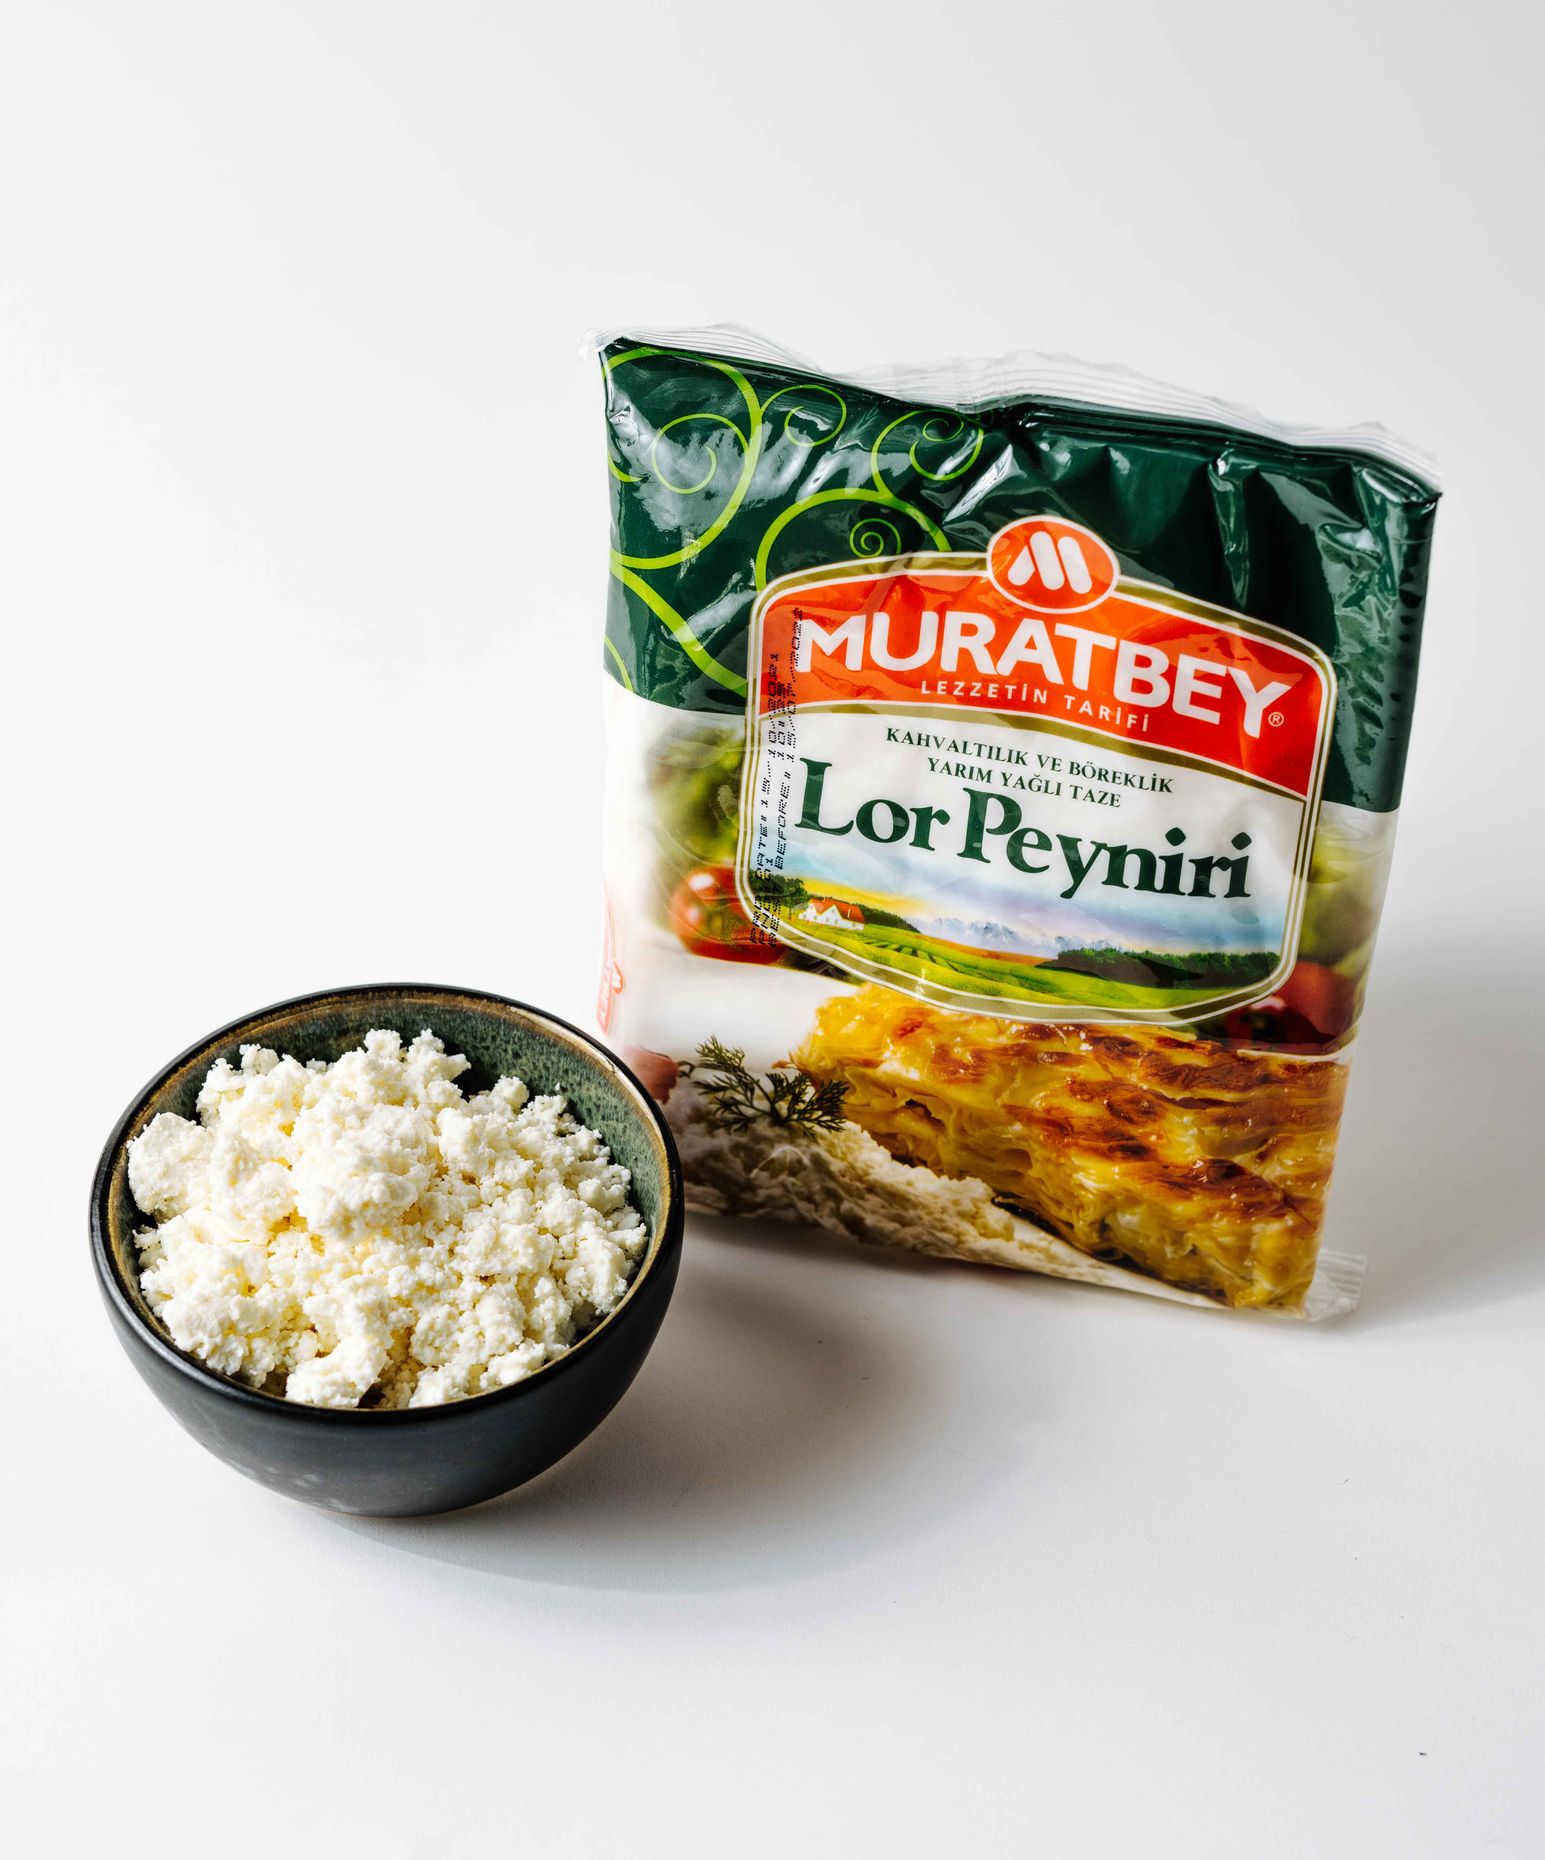 Muratbey Lor peyniri